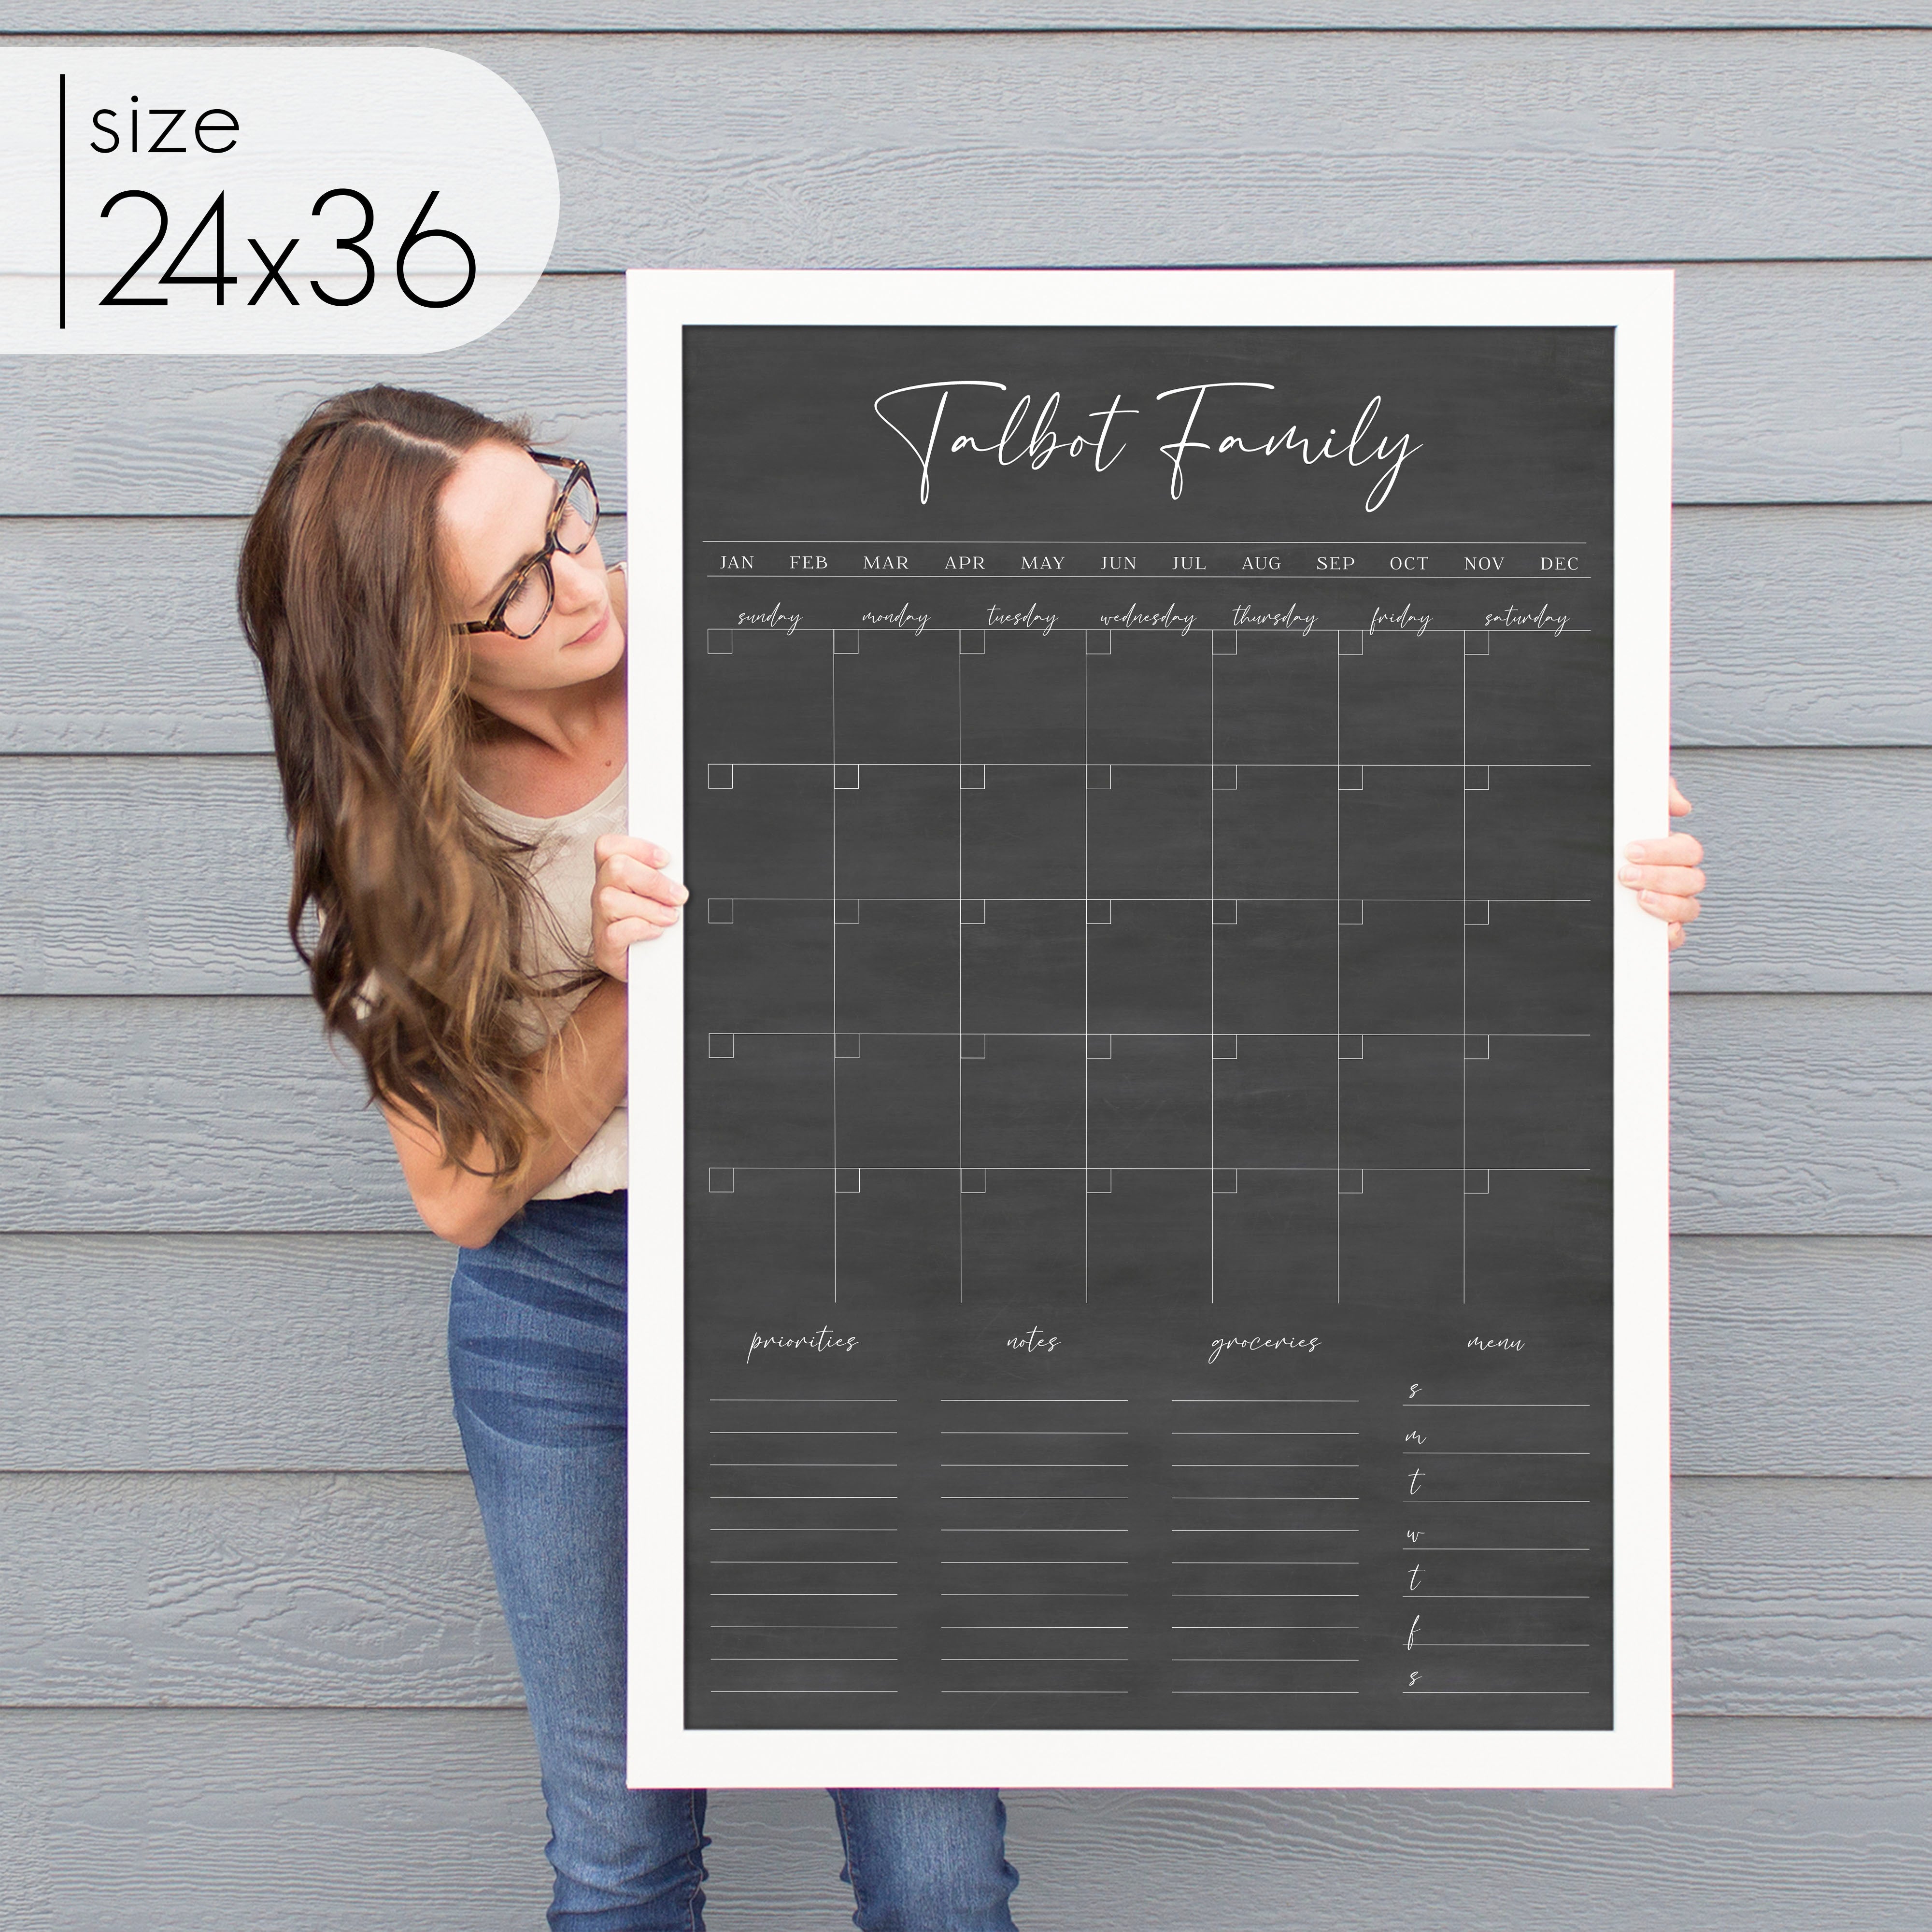 Monthly Framed Chalkboard Calendar + 4 sections | Vertical Pennington